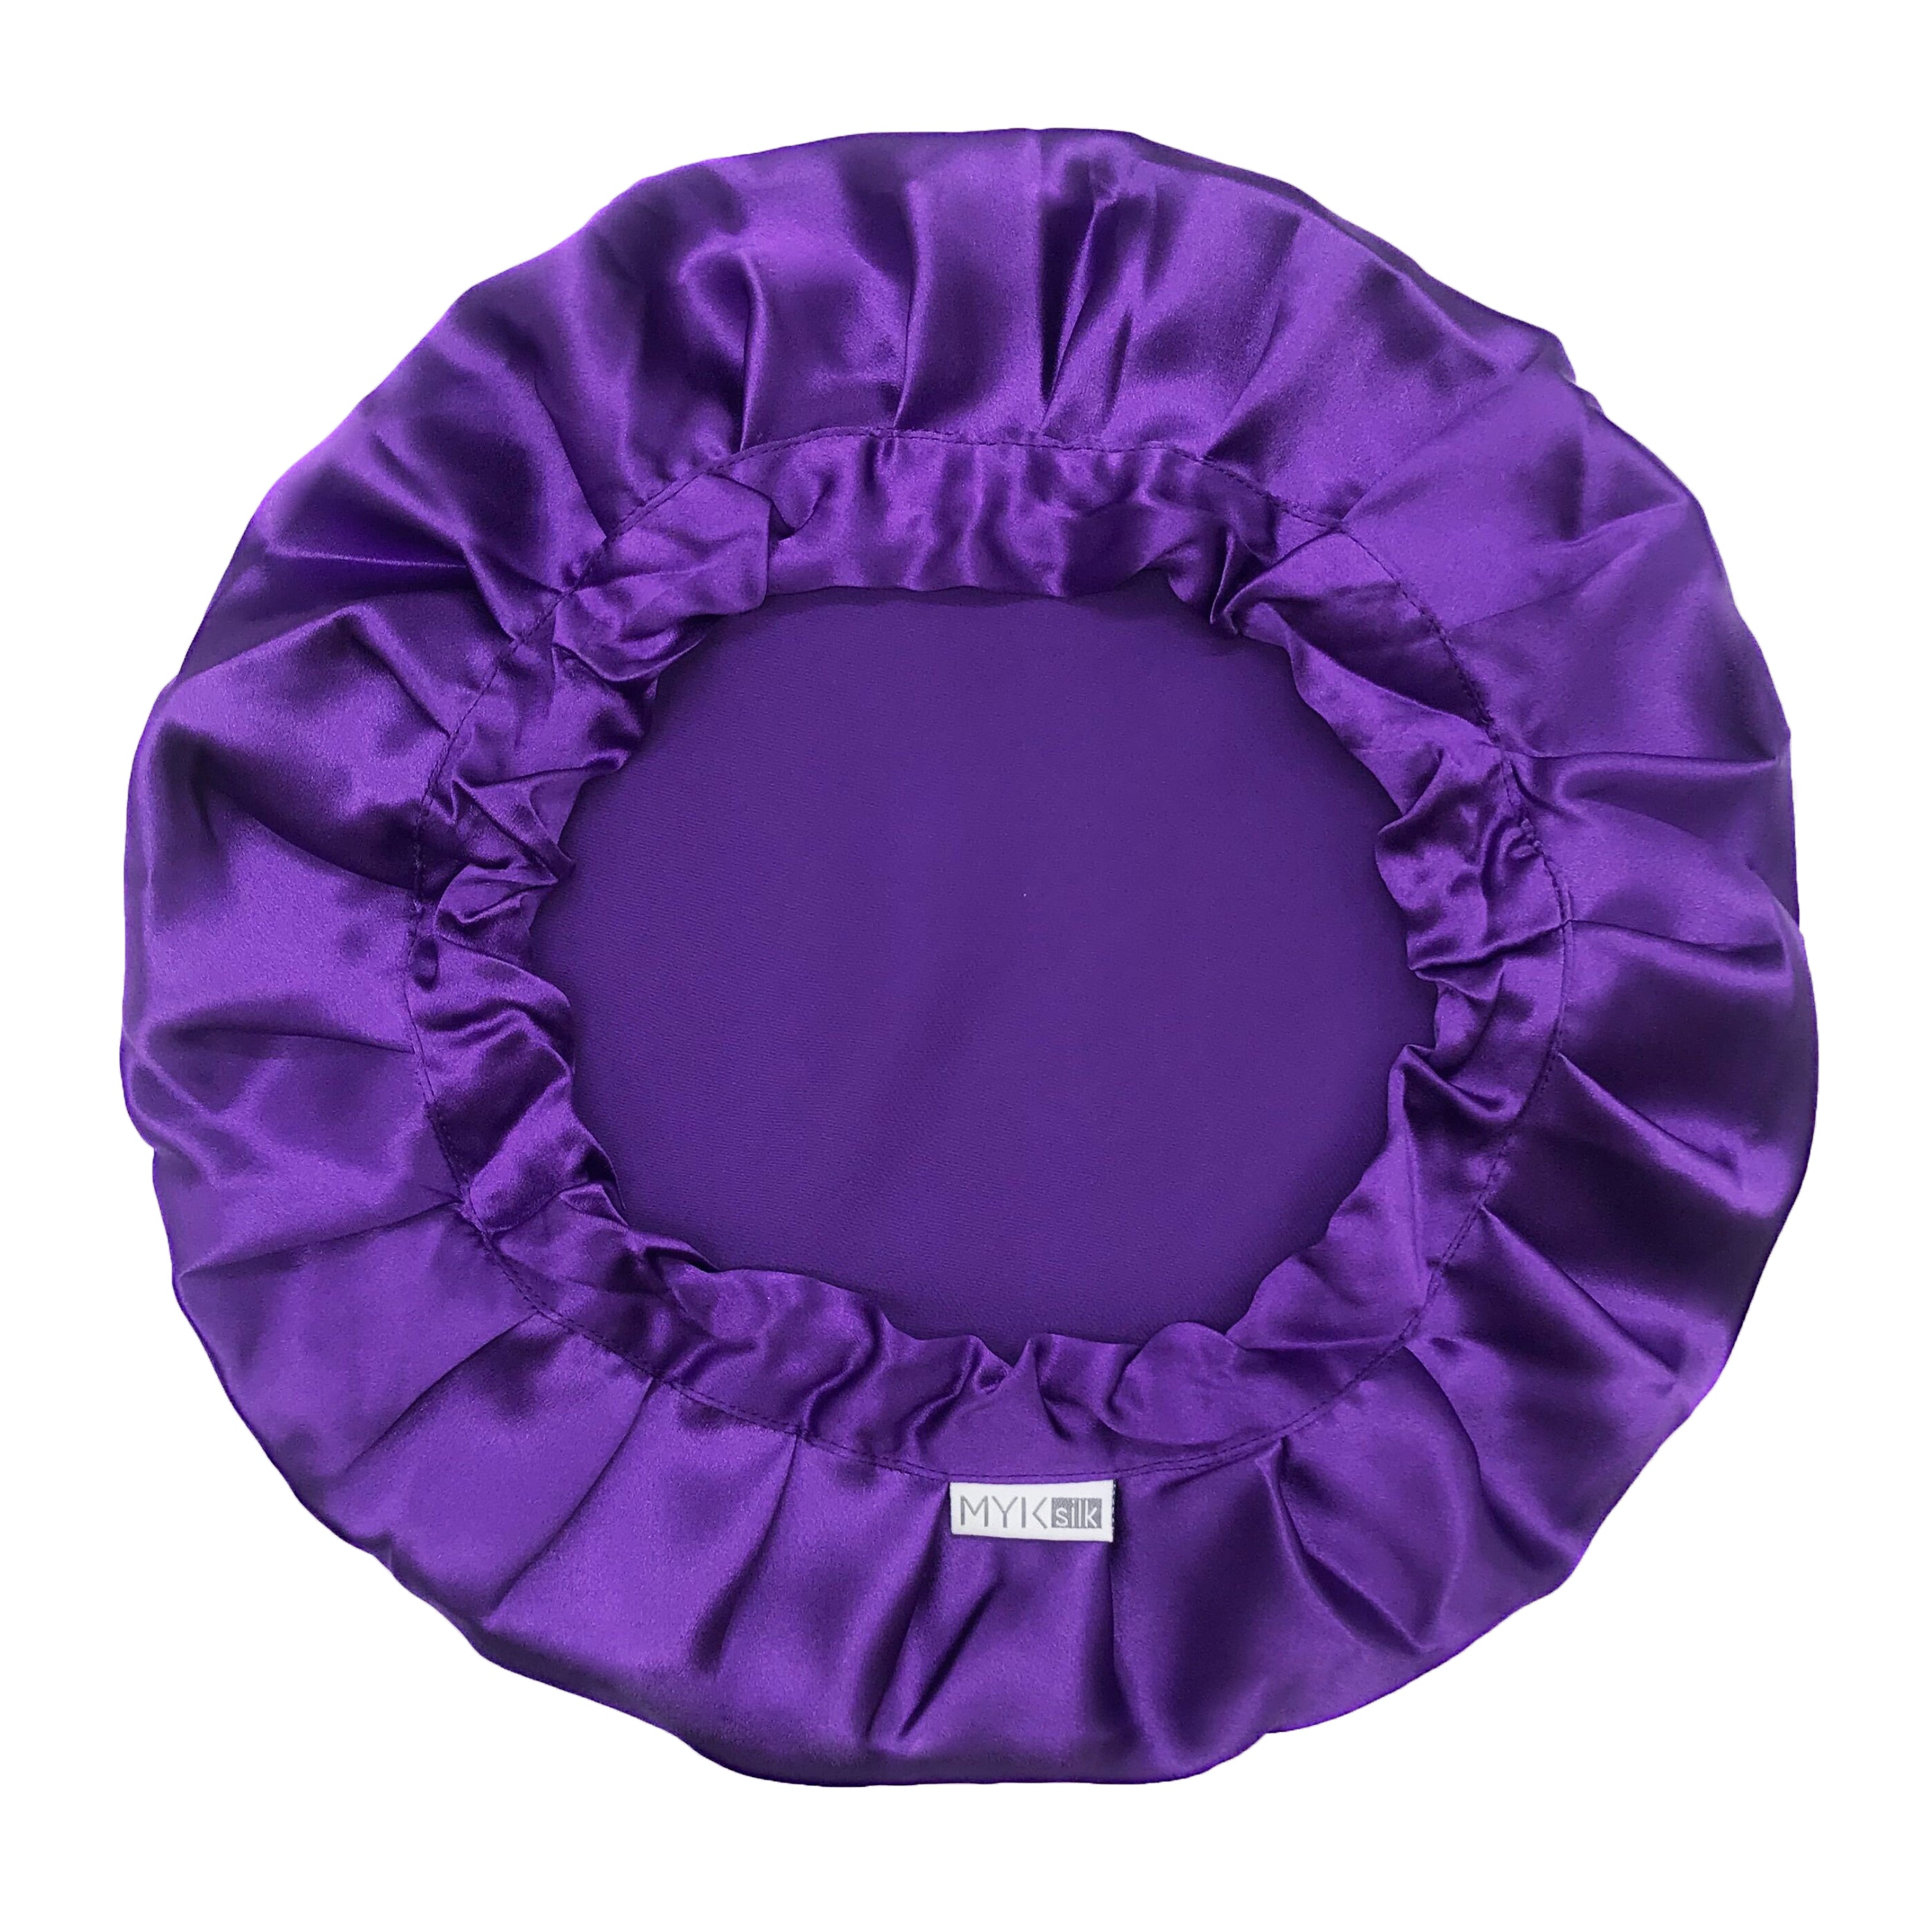 Silk Night Sleeping Cap Bonnet with Comfort Elastic Band - MYK Silk #color_purple